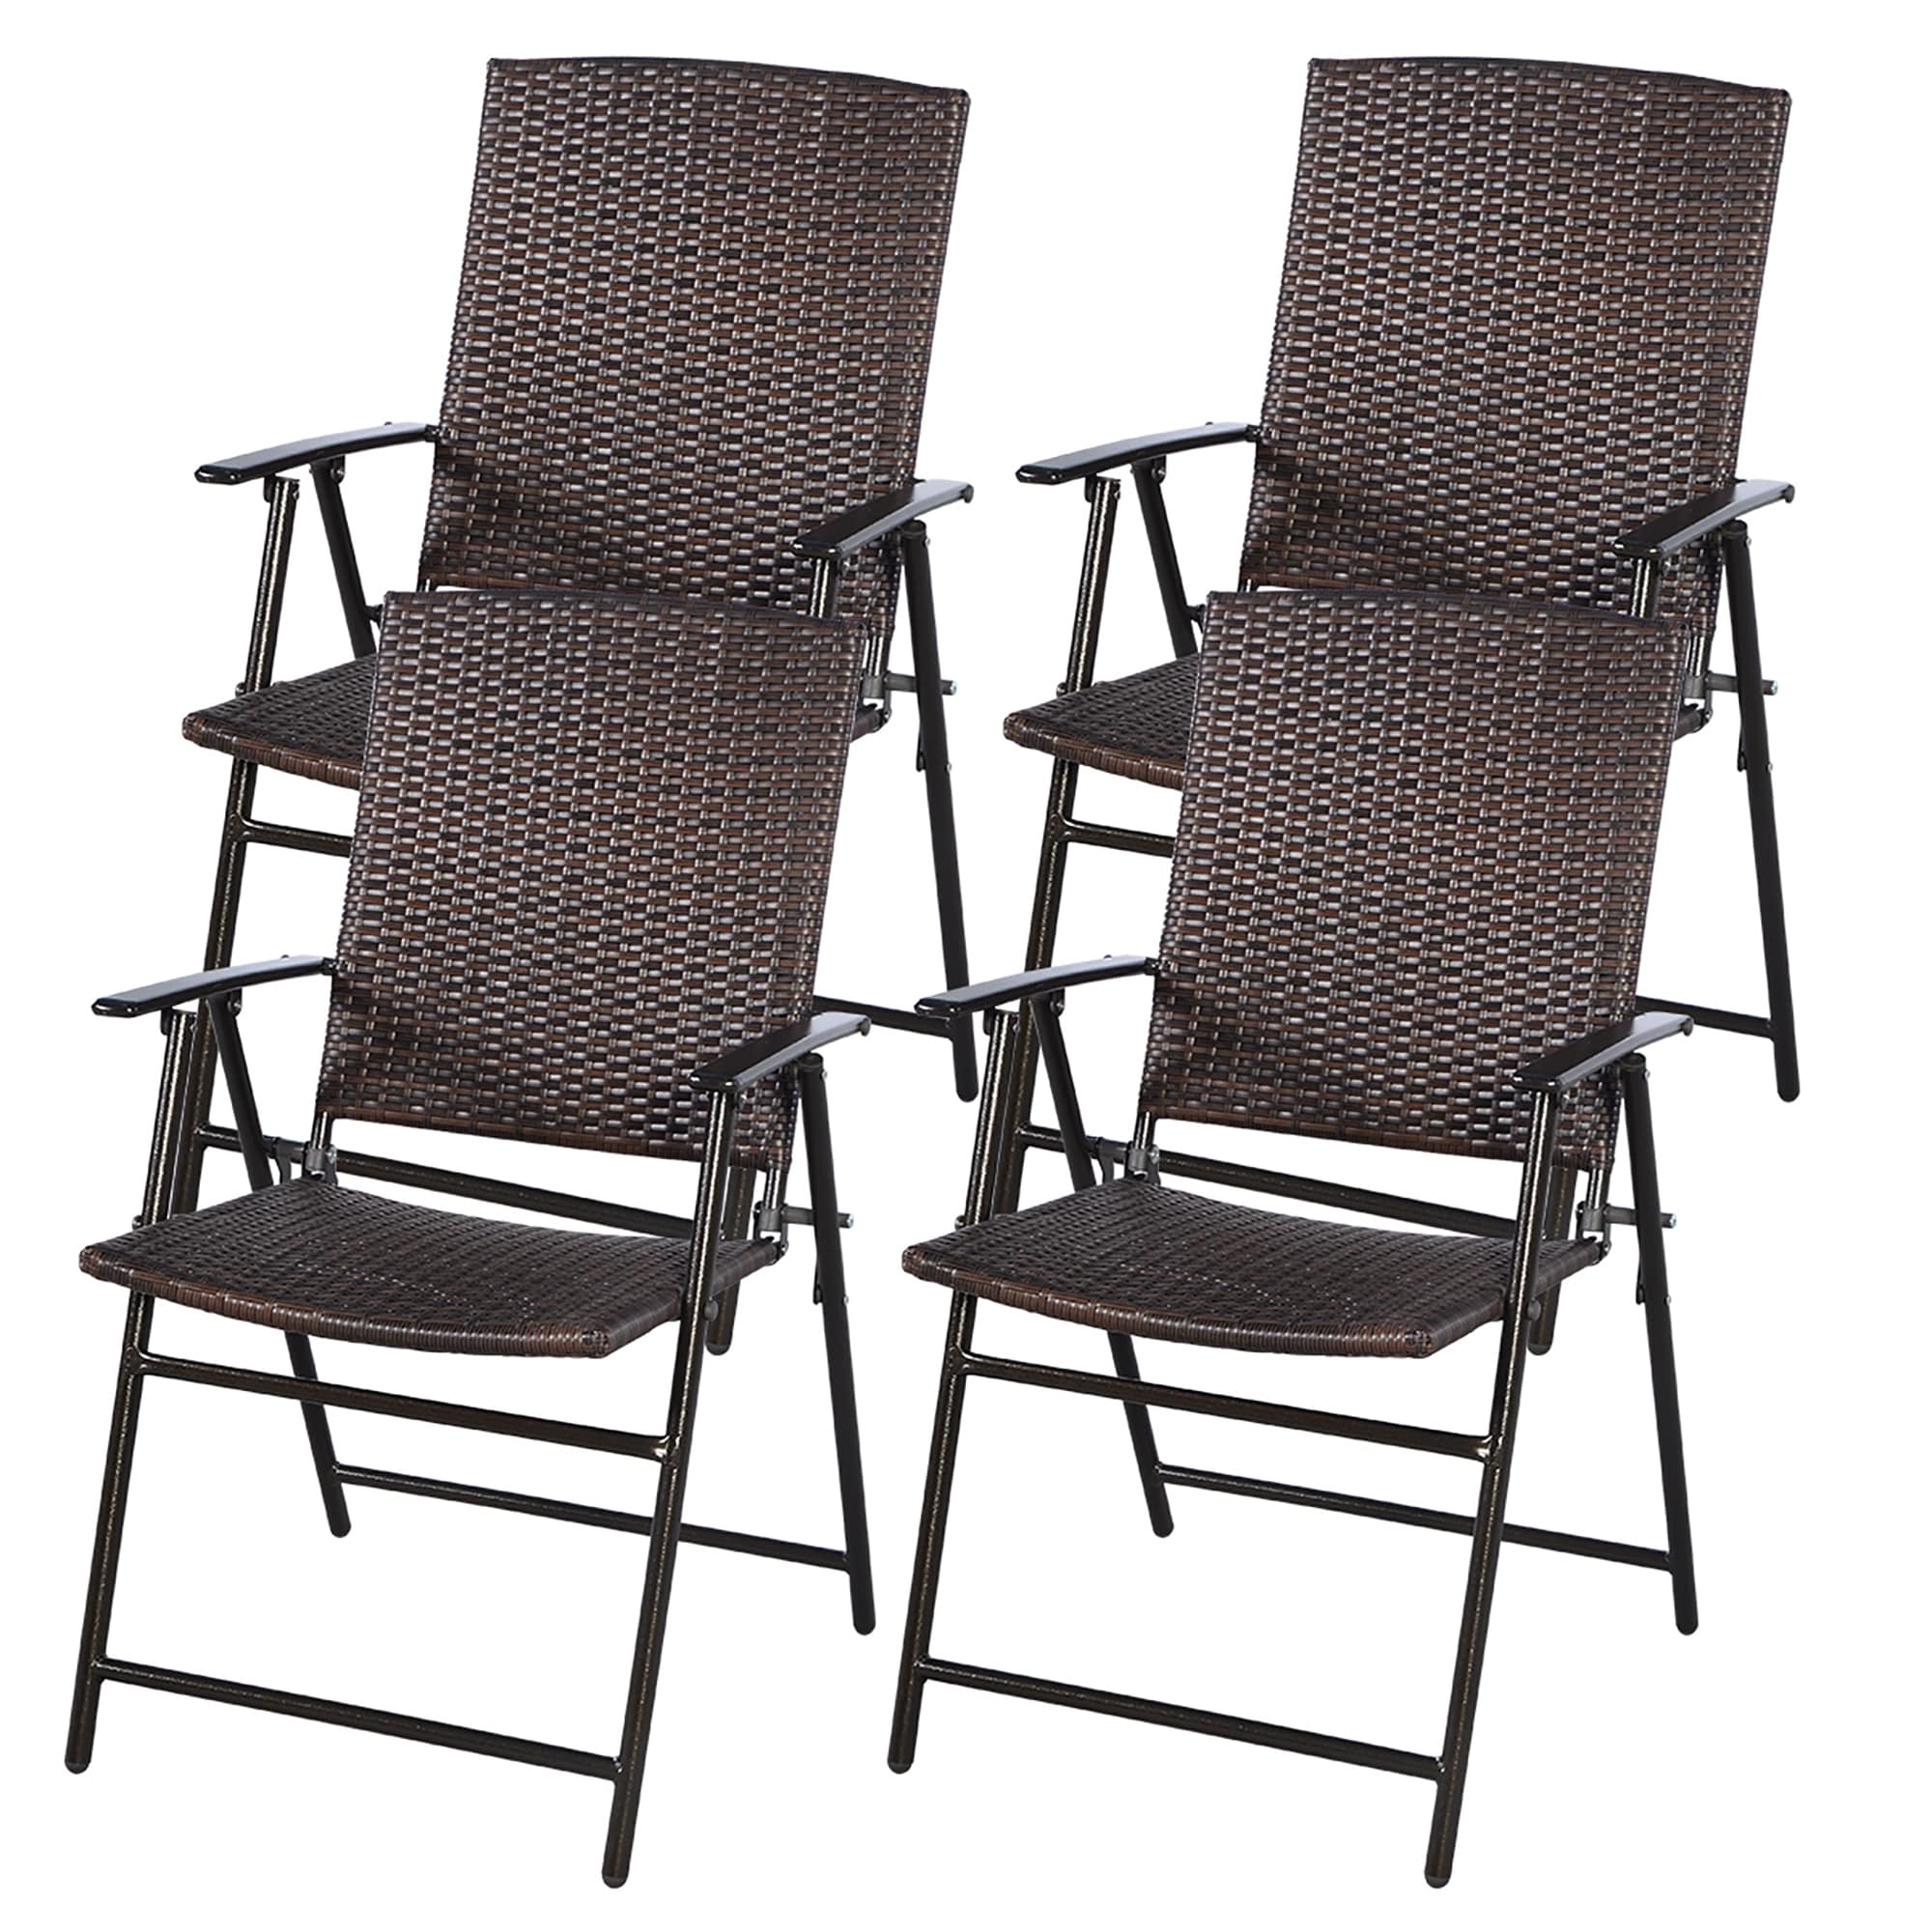 4 Pcs Folding Patio Chair Set Outdoor Portable Wicker Chair